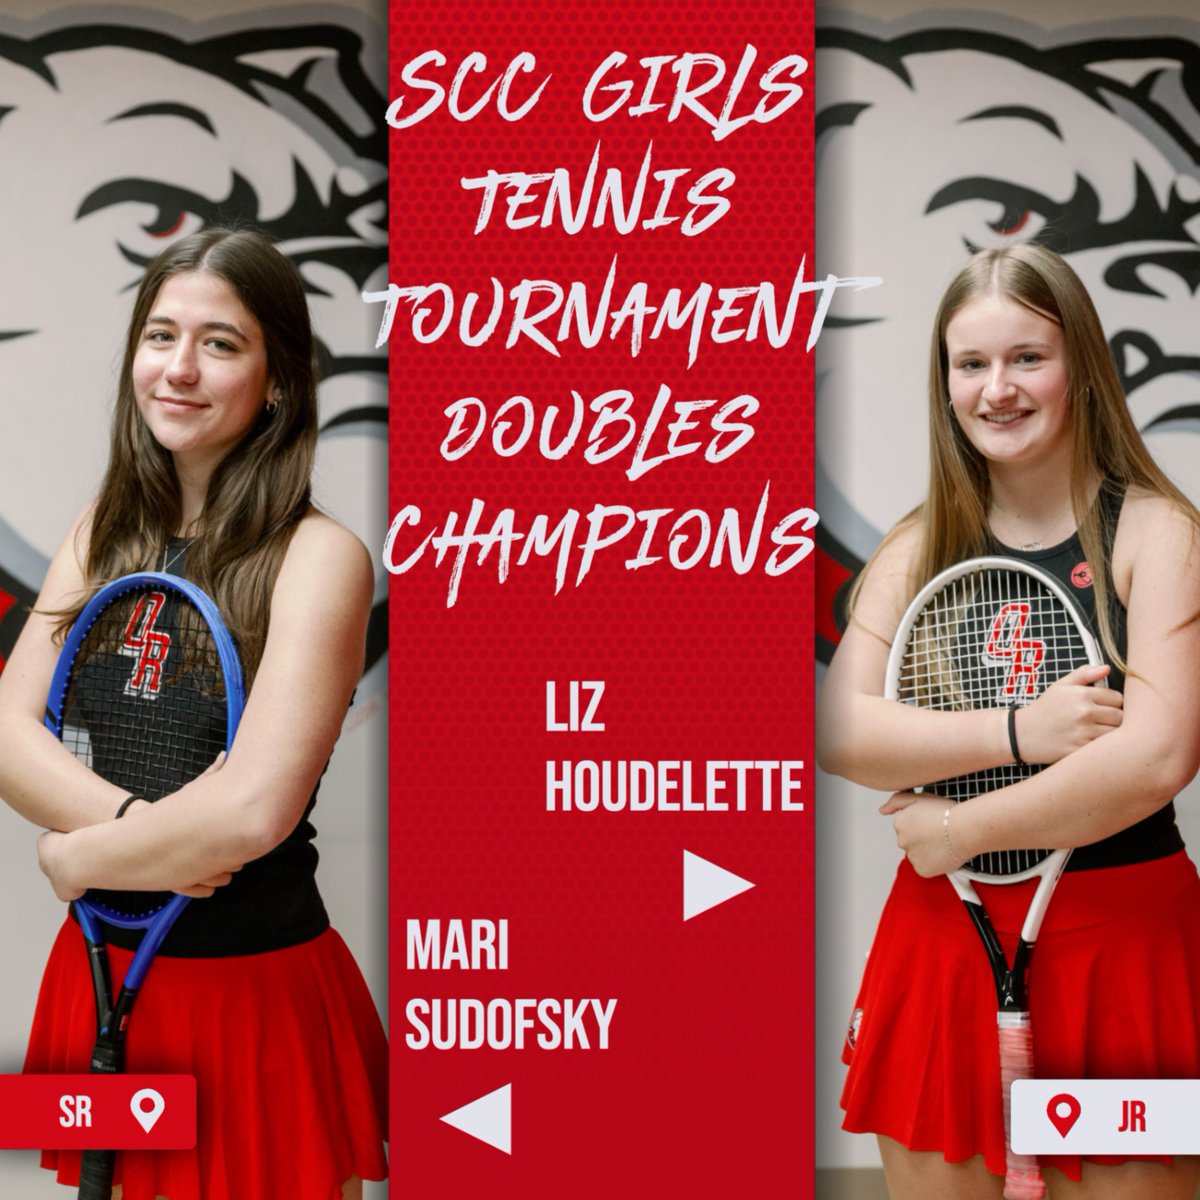 SCC Girls Tennis Tournament Doubles Champions: Liz Houdelette and Mari Sudofsky!!